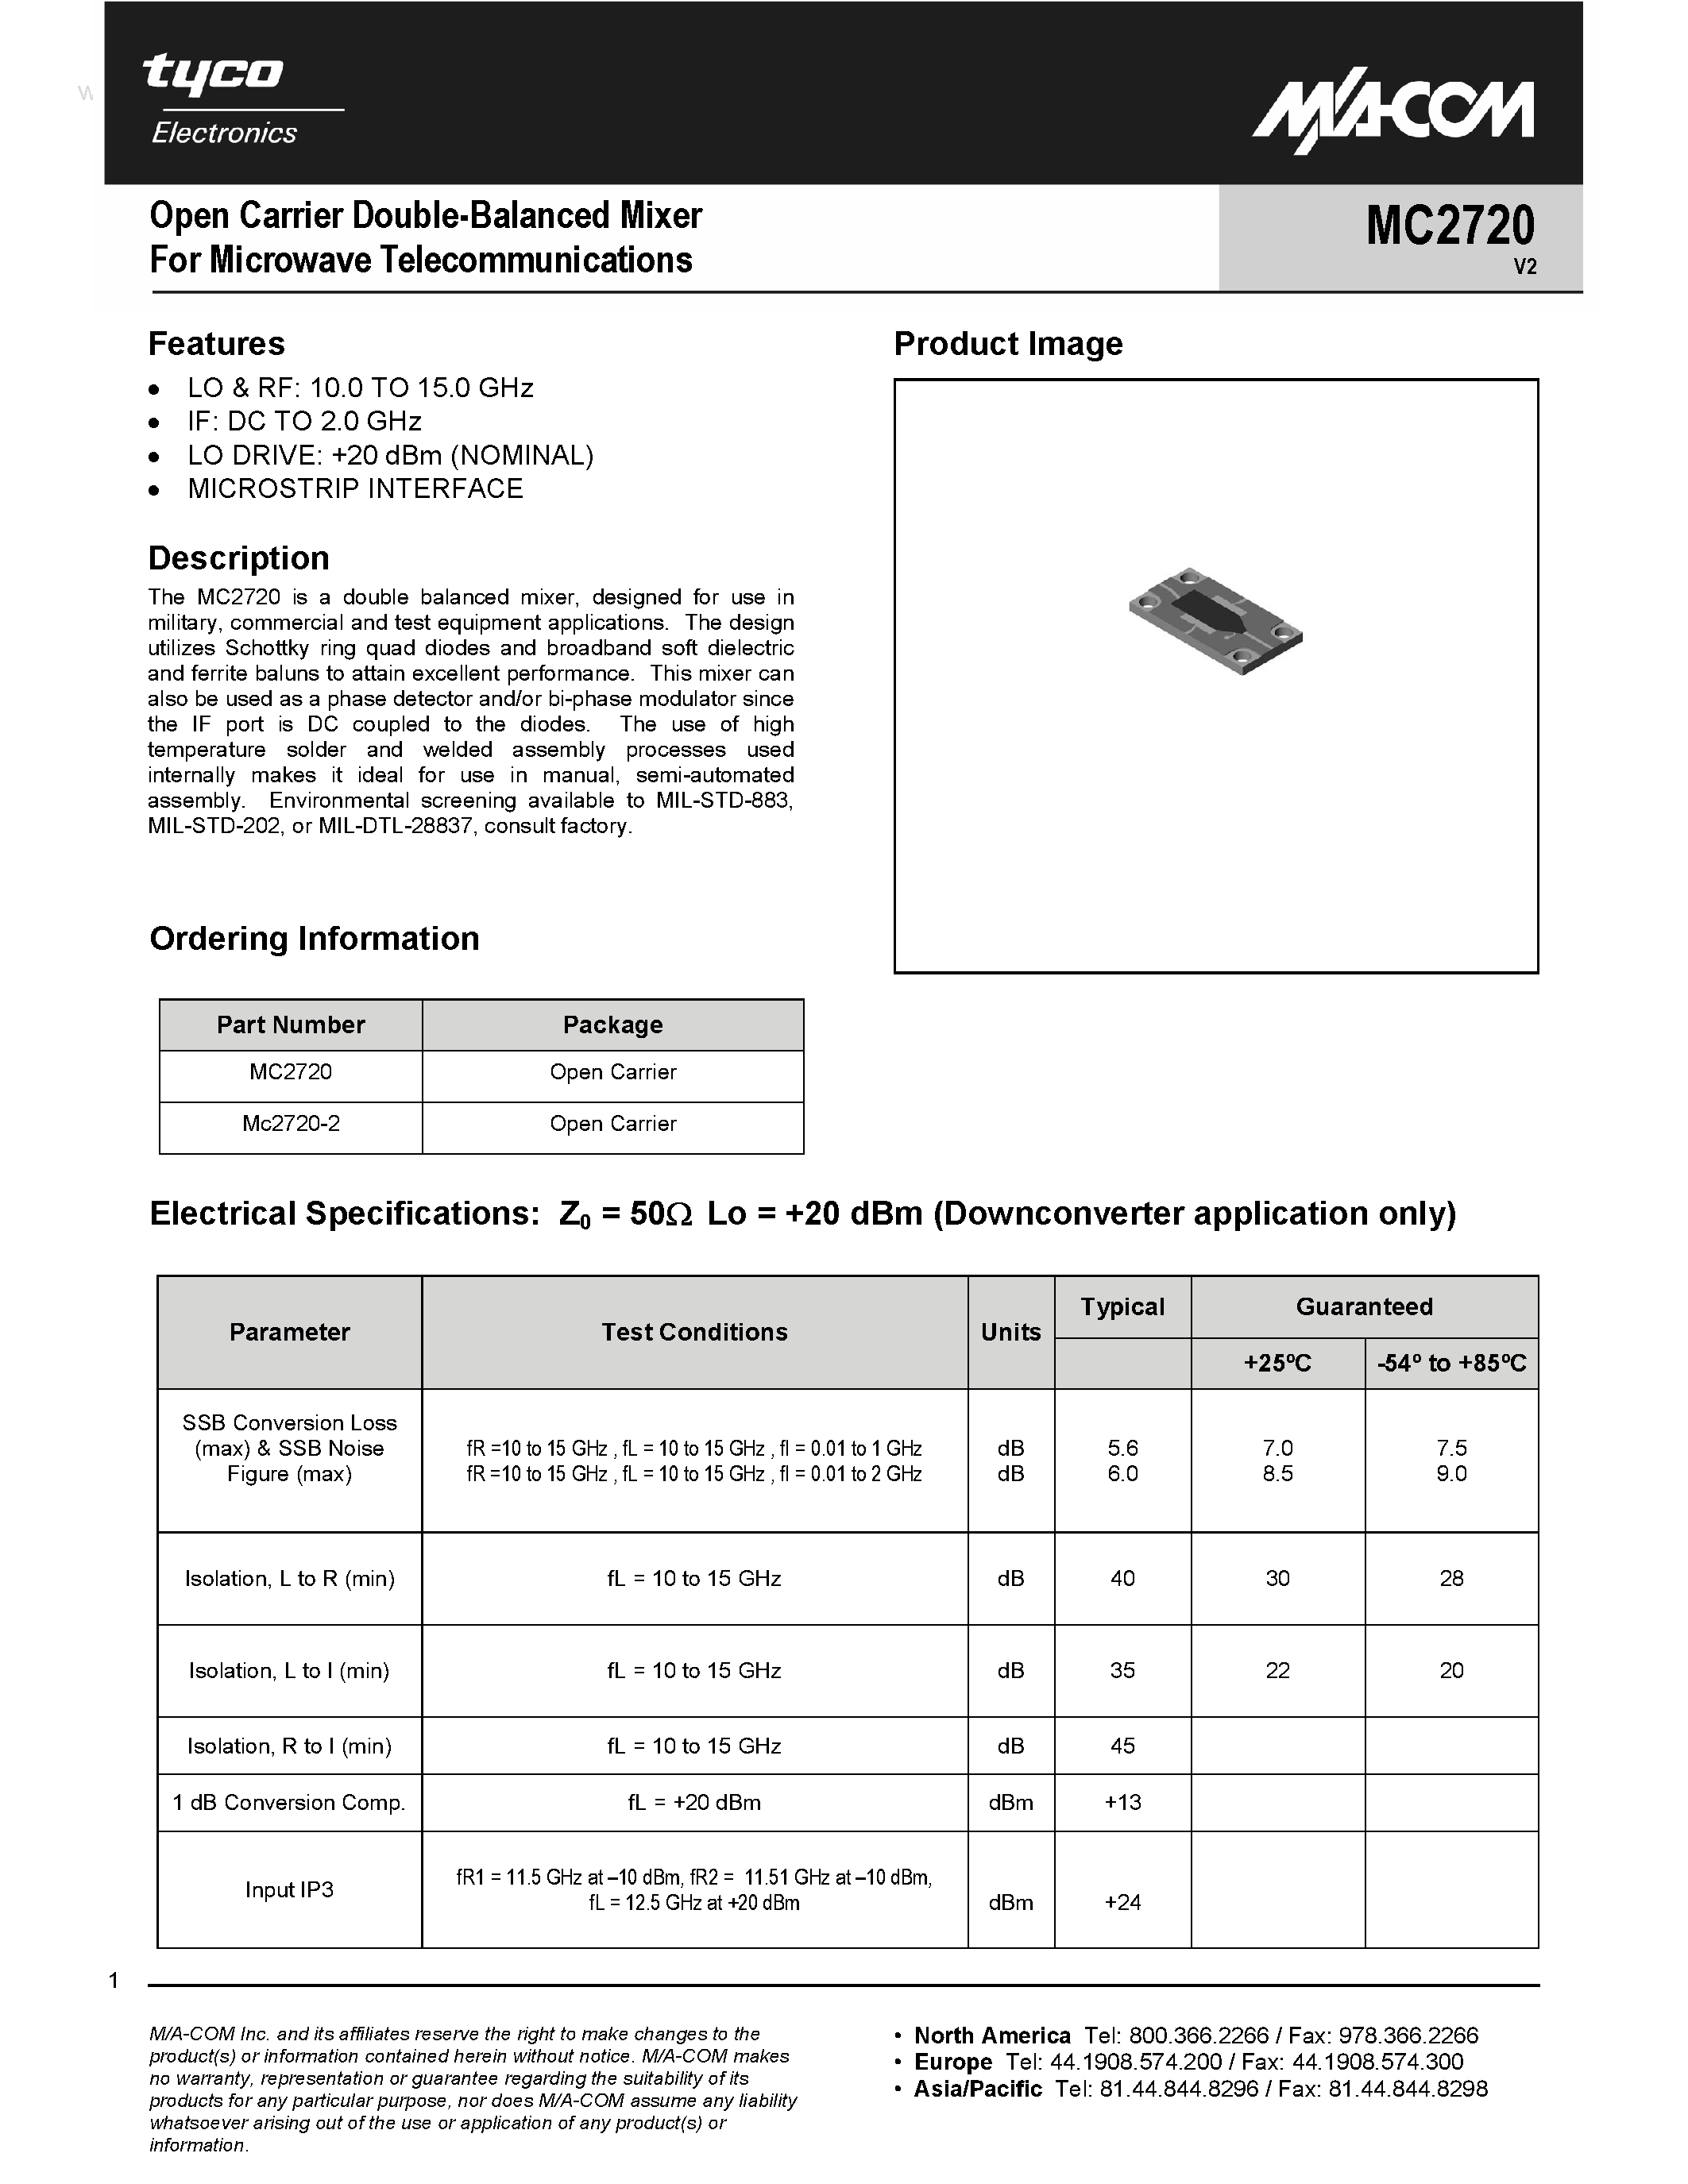 Datasheet MC2720 - Open Carrier Double-Balanced Mixer page 1